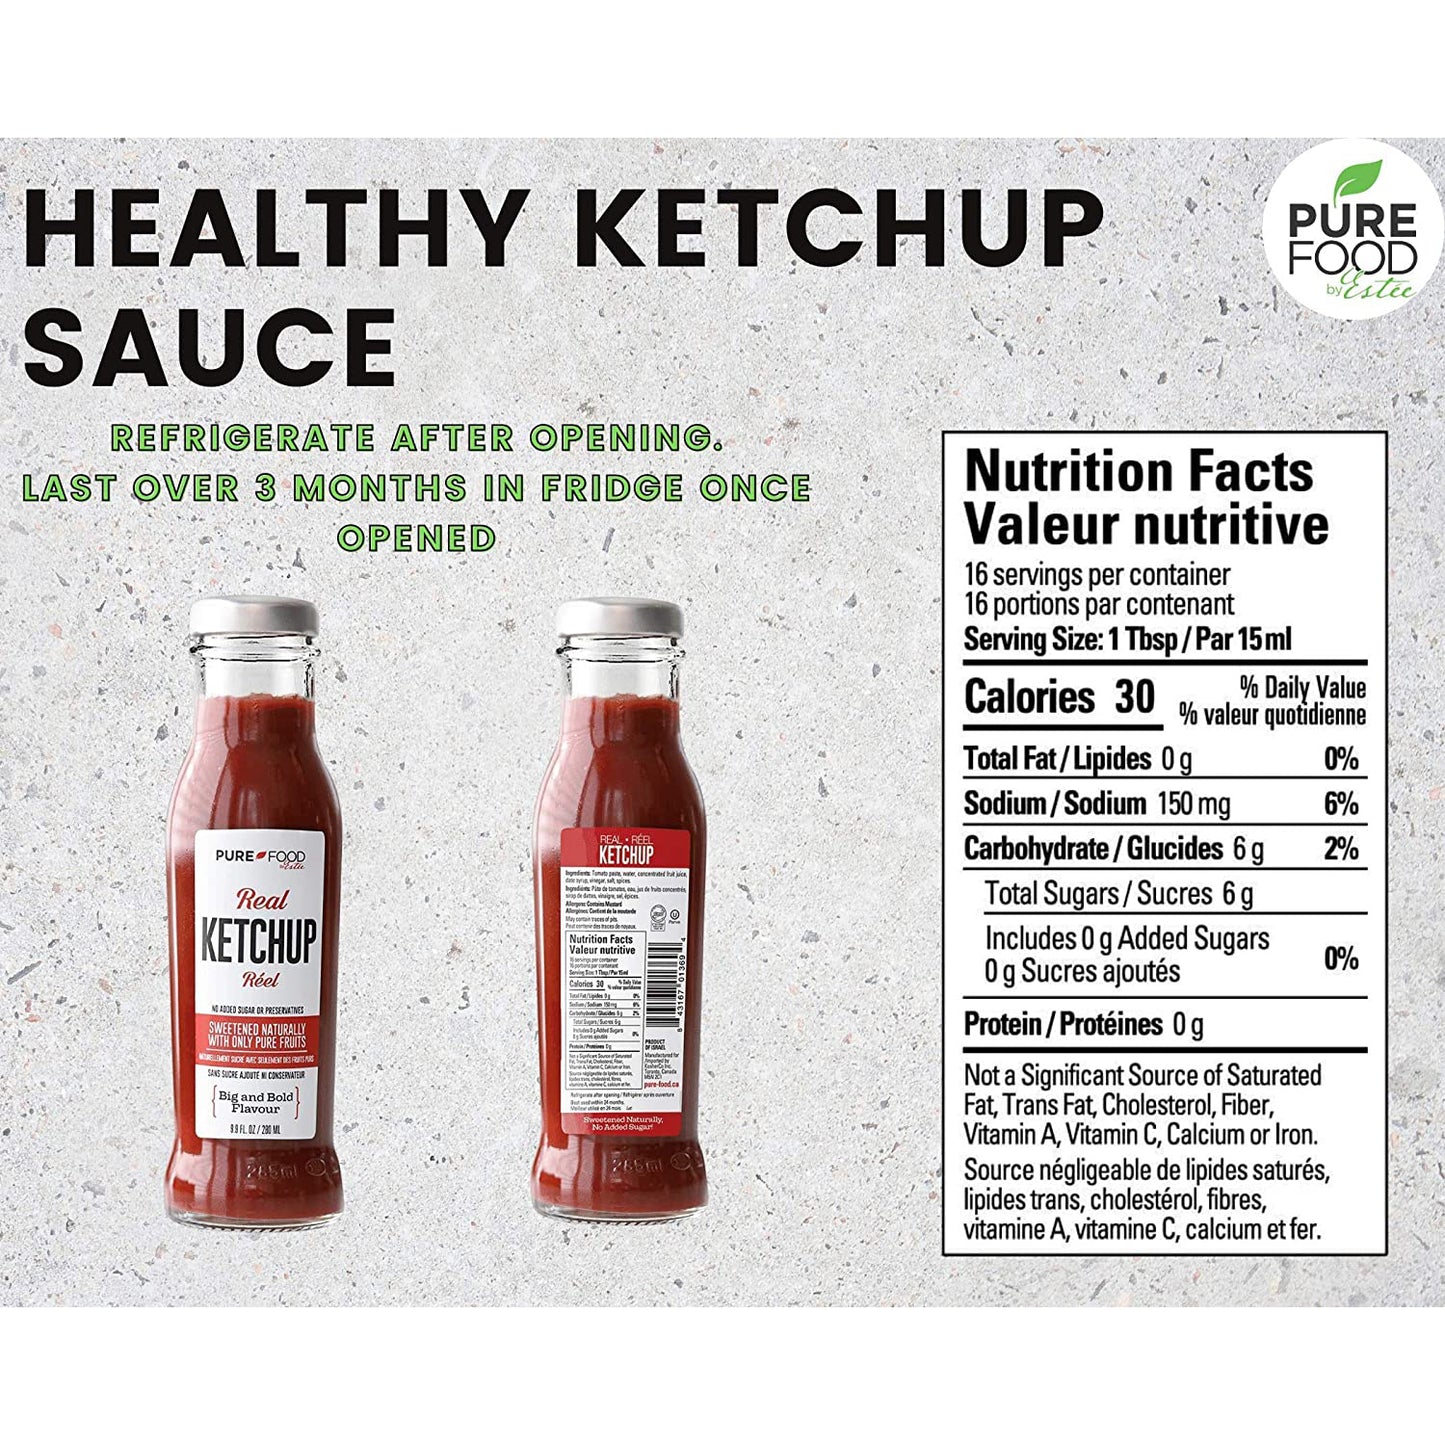 Ketchup sin azúcar añadido 